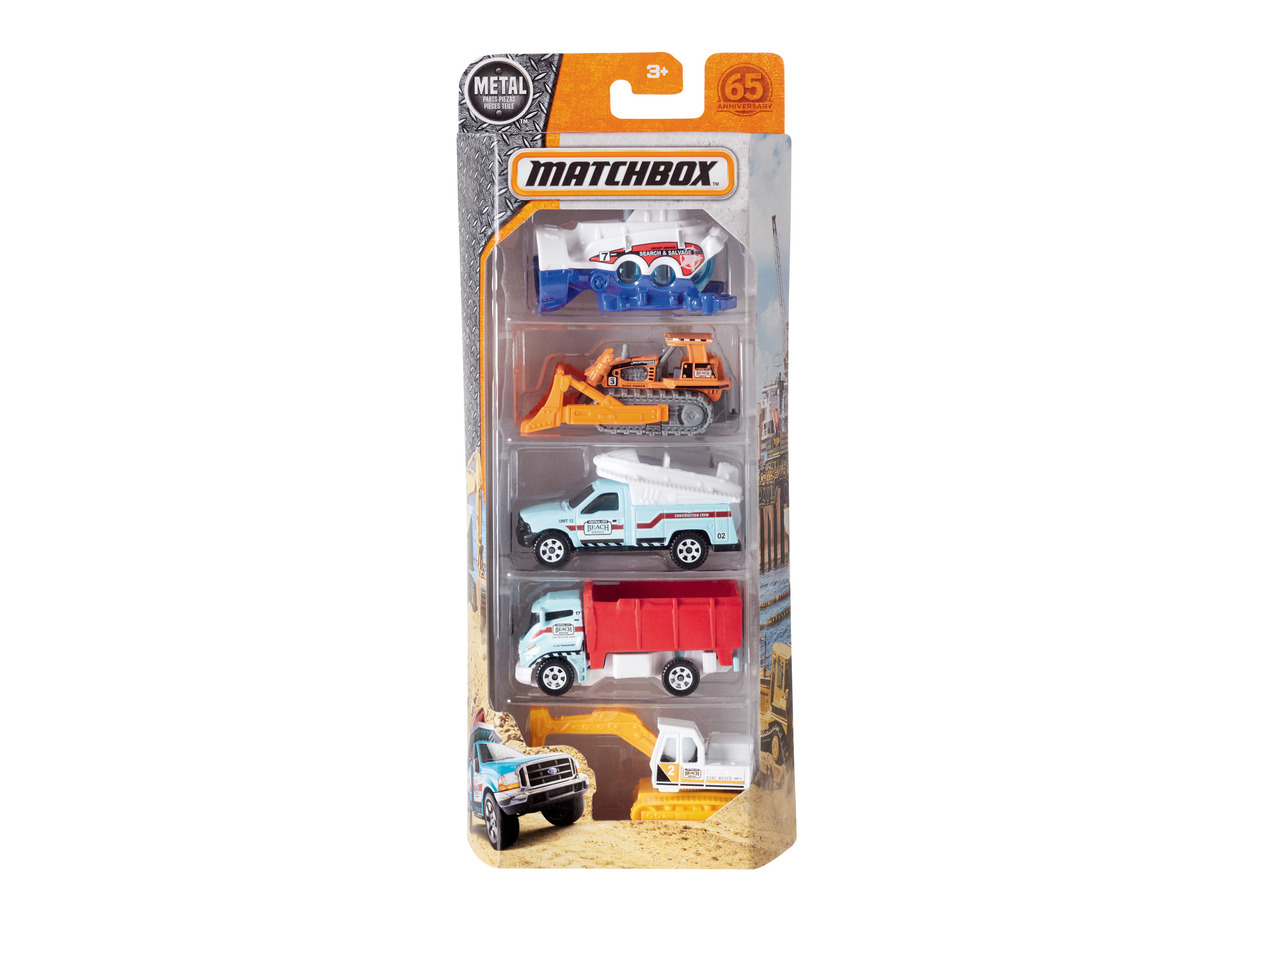 MATCHBOX Toy Car Gift Set